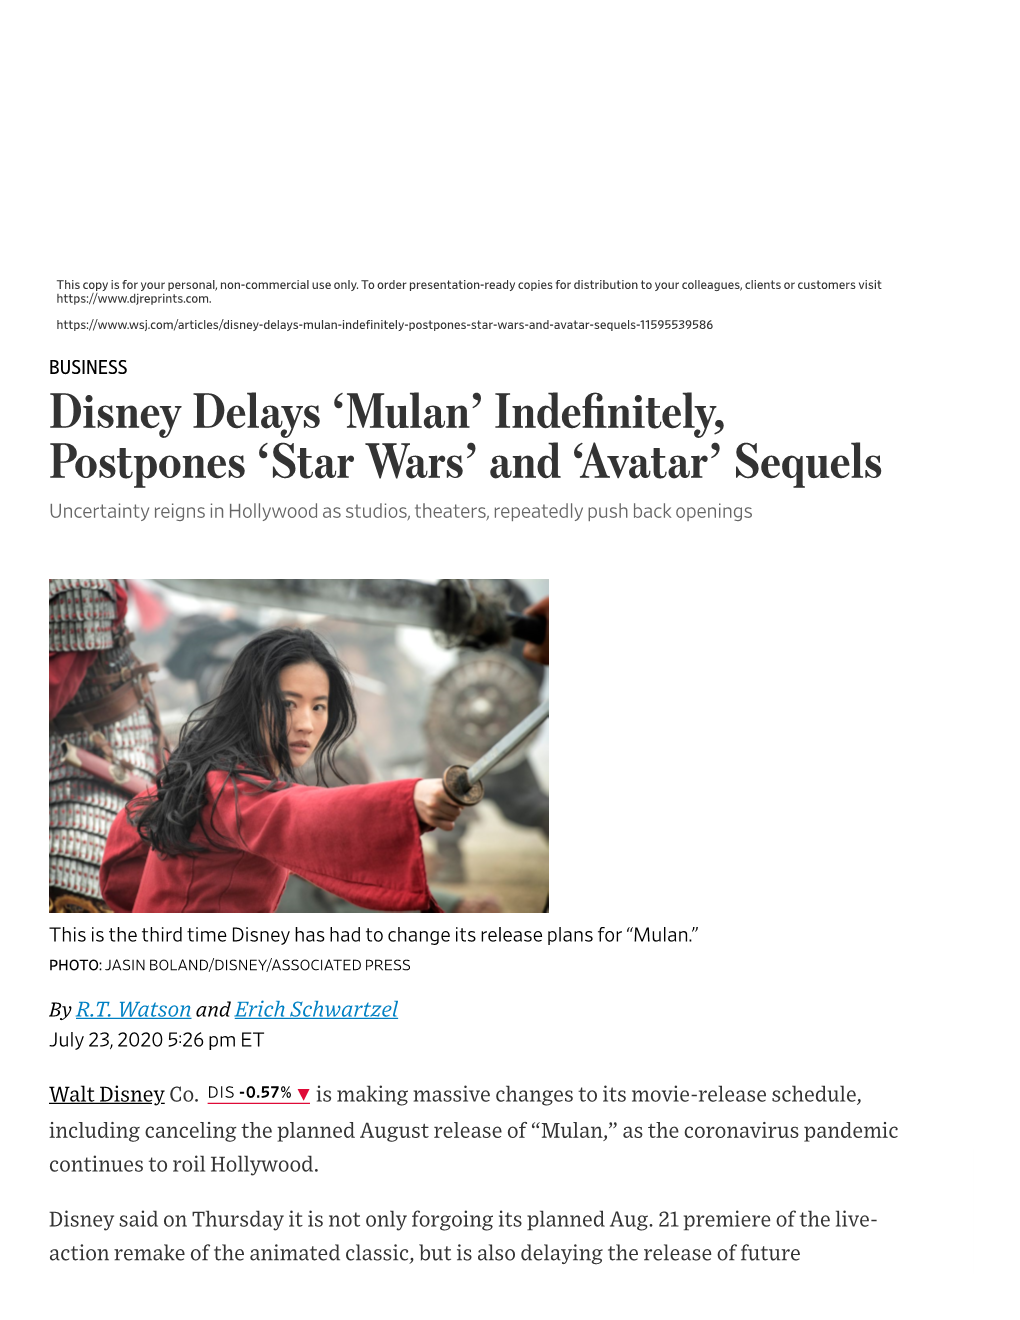 Disney Delays 'Mulan' Indefinitely, Postpones 'Star Wars' and 'Avatar